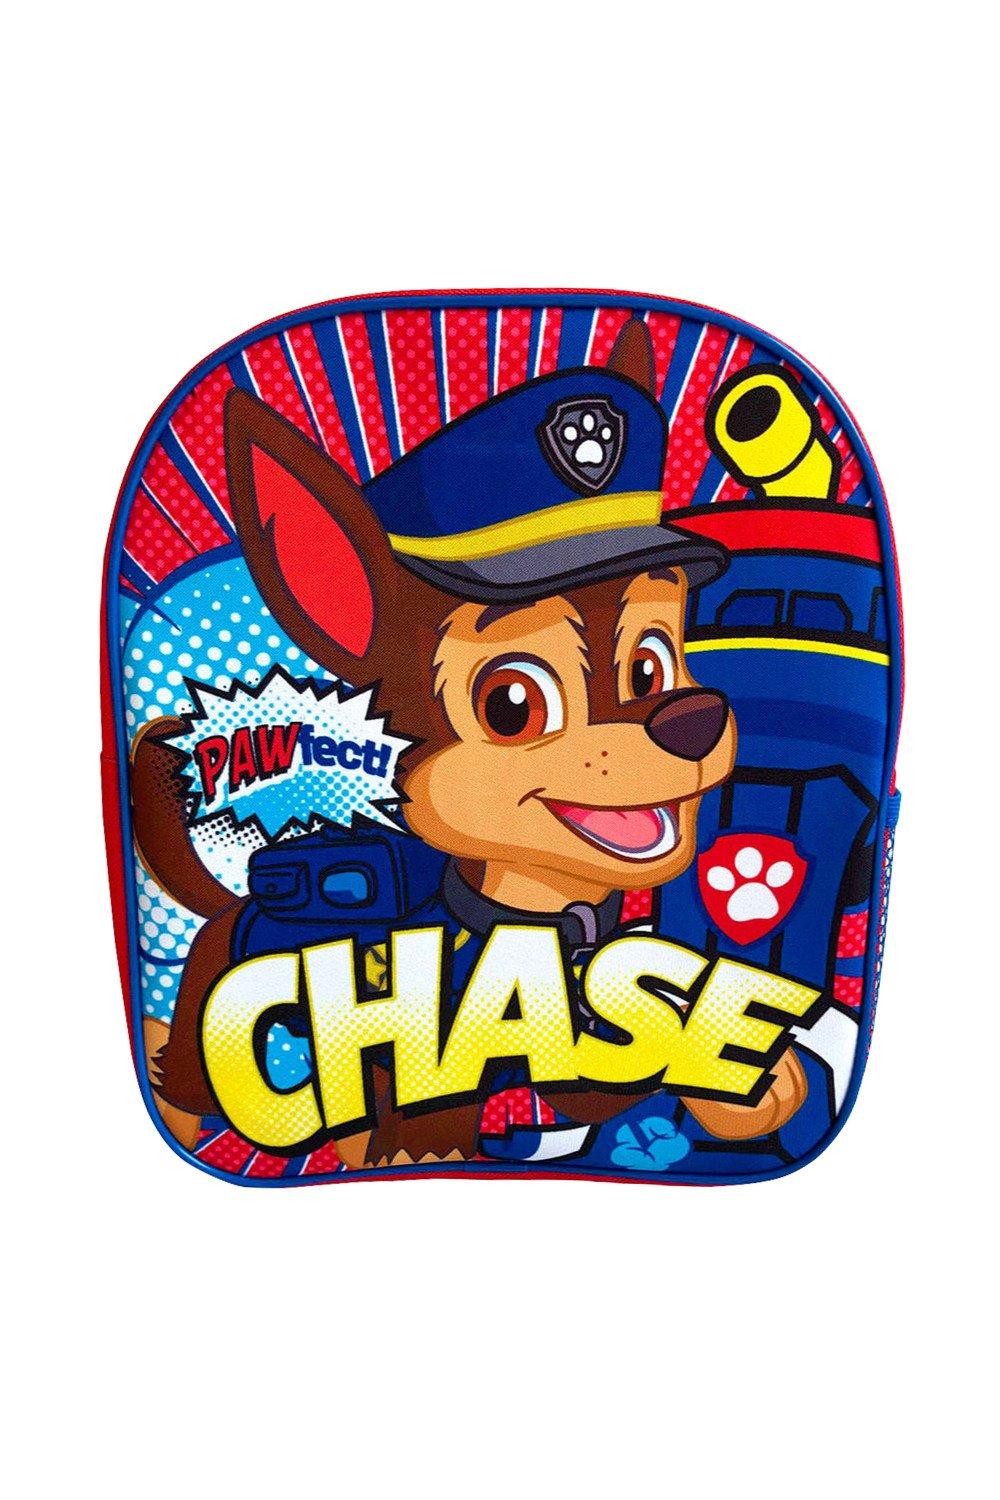 Рюкзак Pawfect Chase Paw Patrol, темно-синий бейсболка и солнцезащитные очки chase paw patrol синий